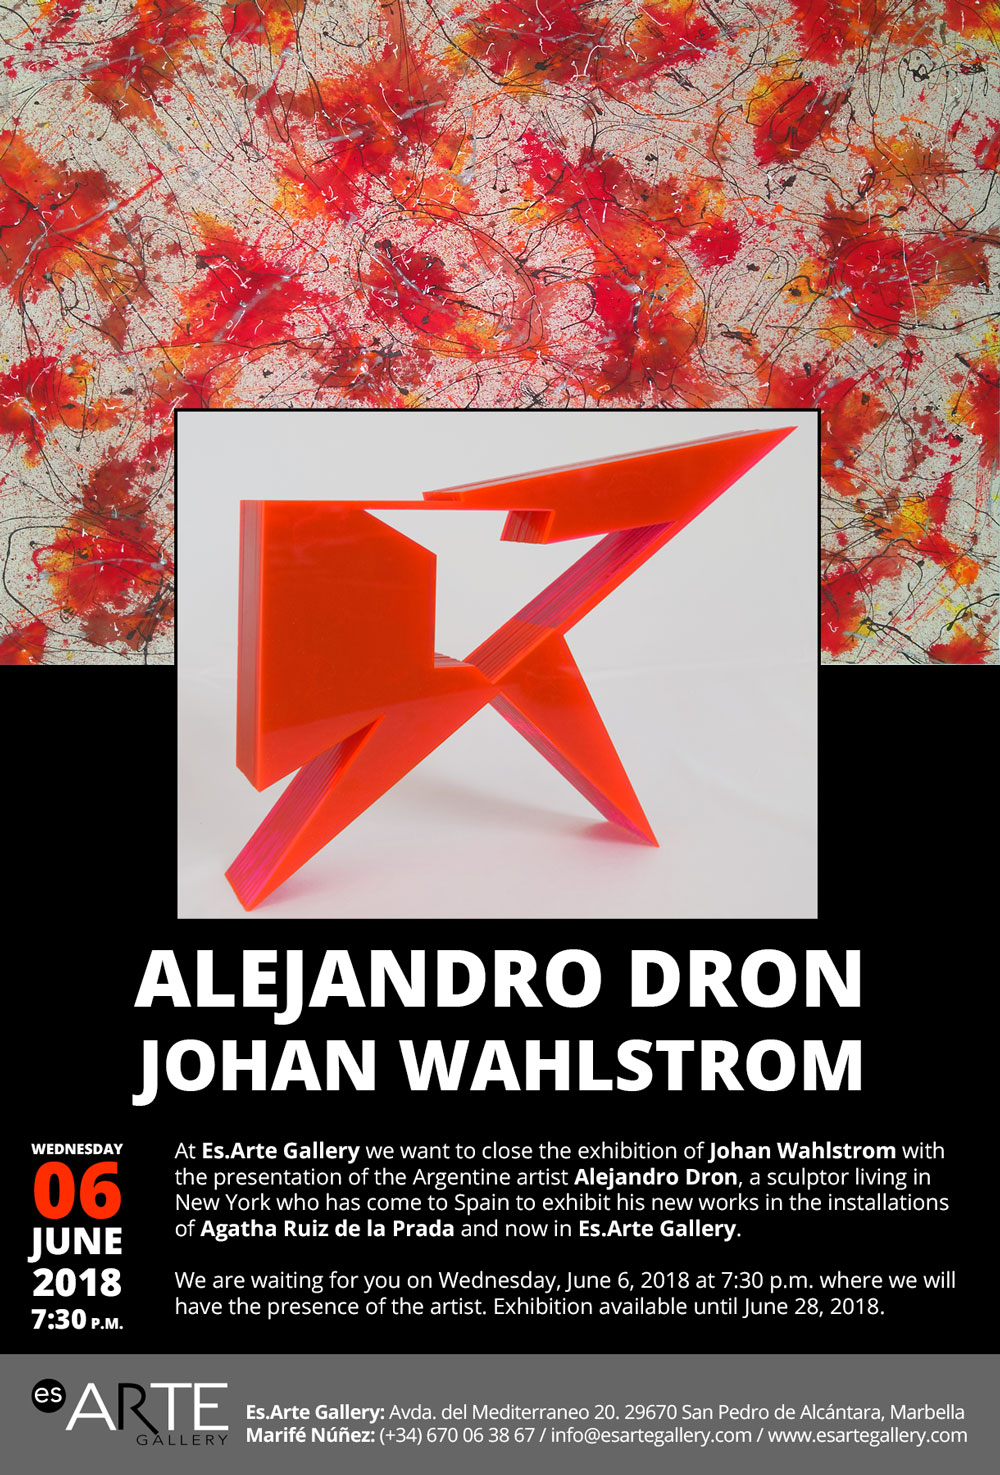 Alejandro Dron art exhibition